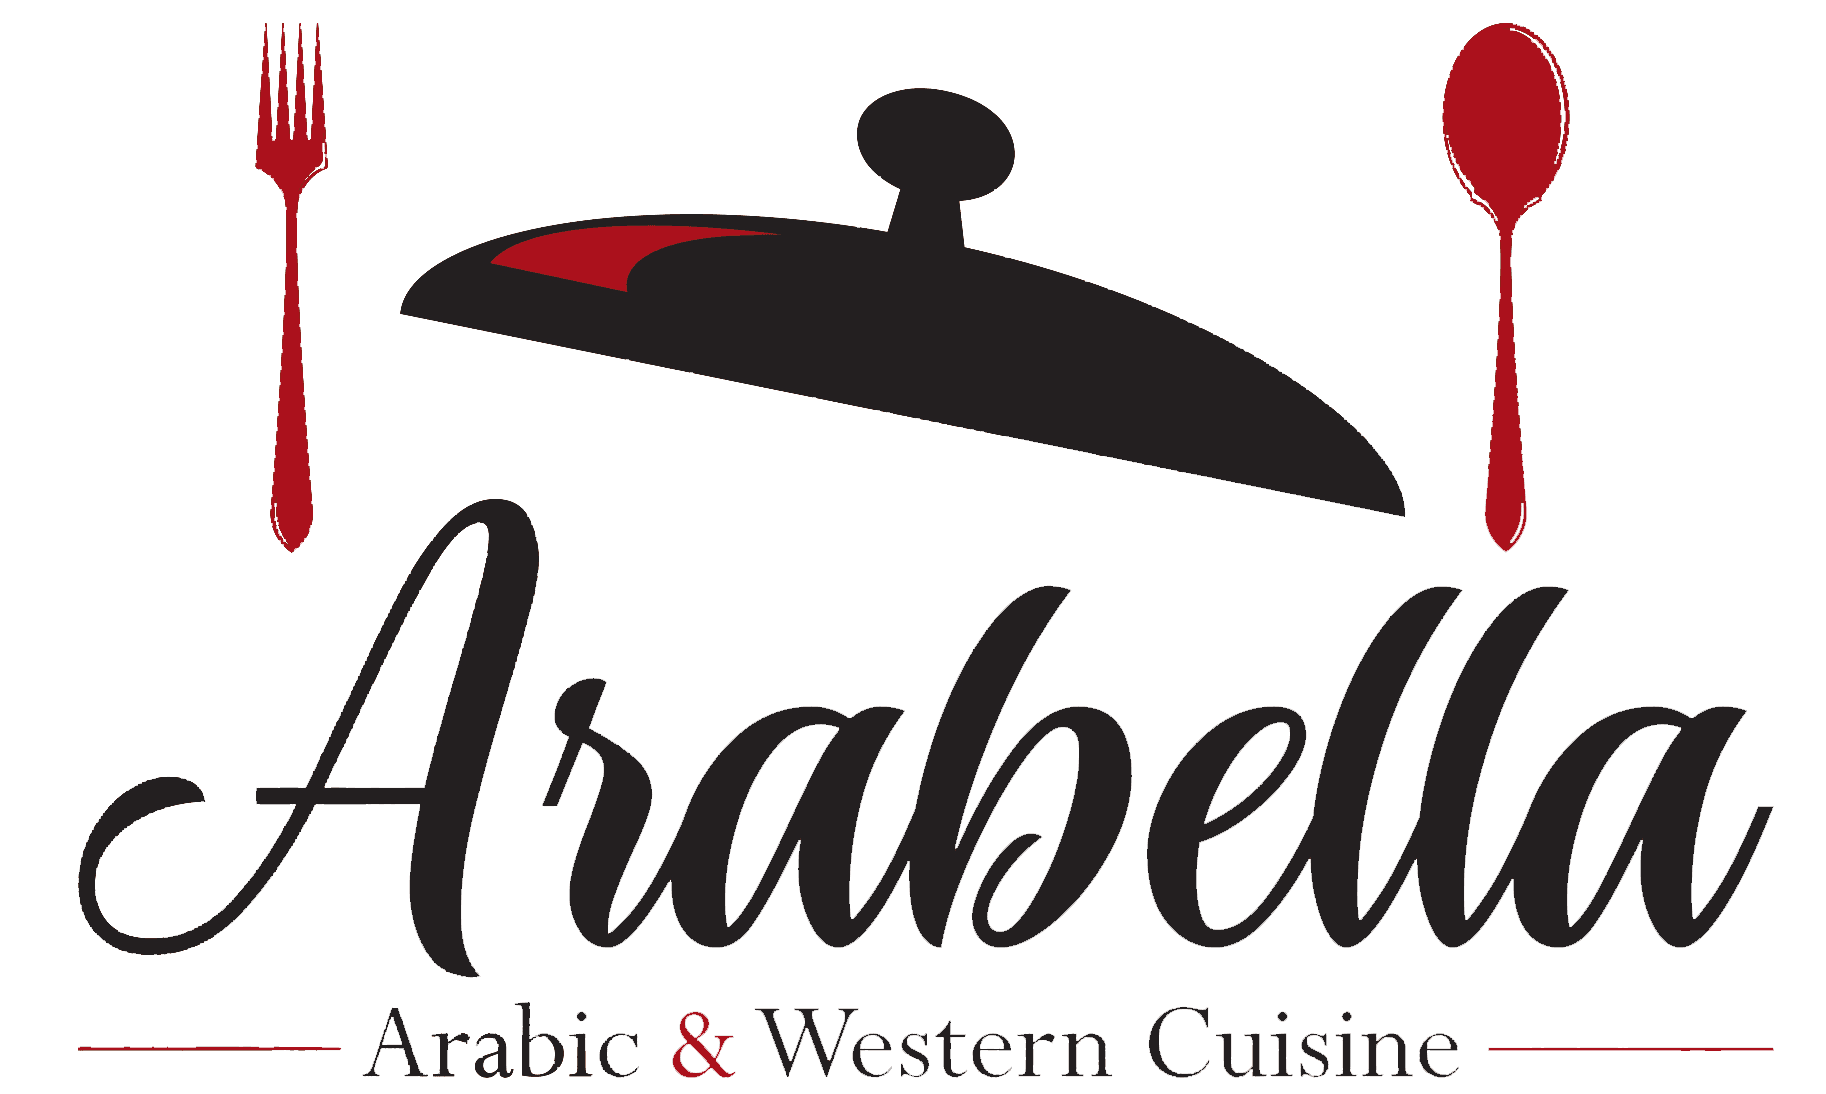 Best Arabic Restaurant in KL